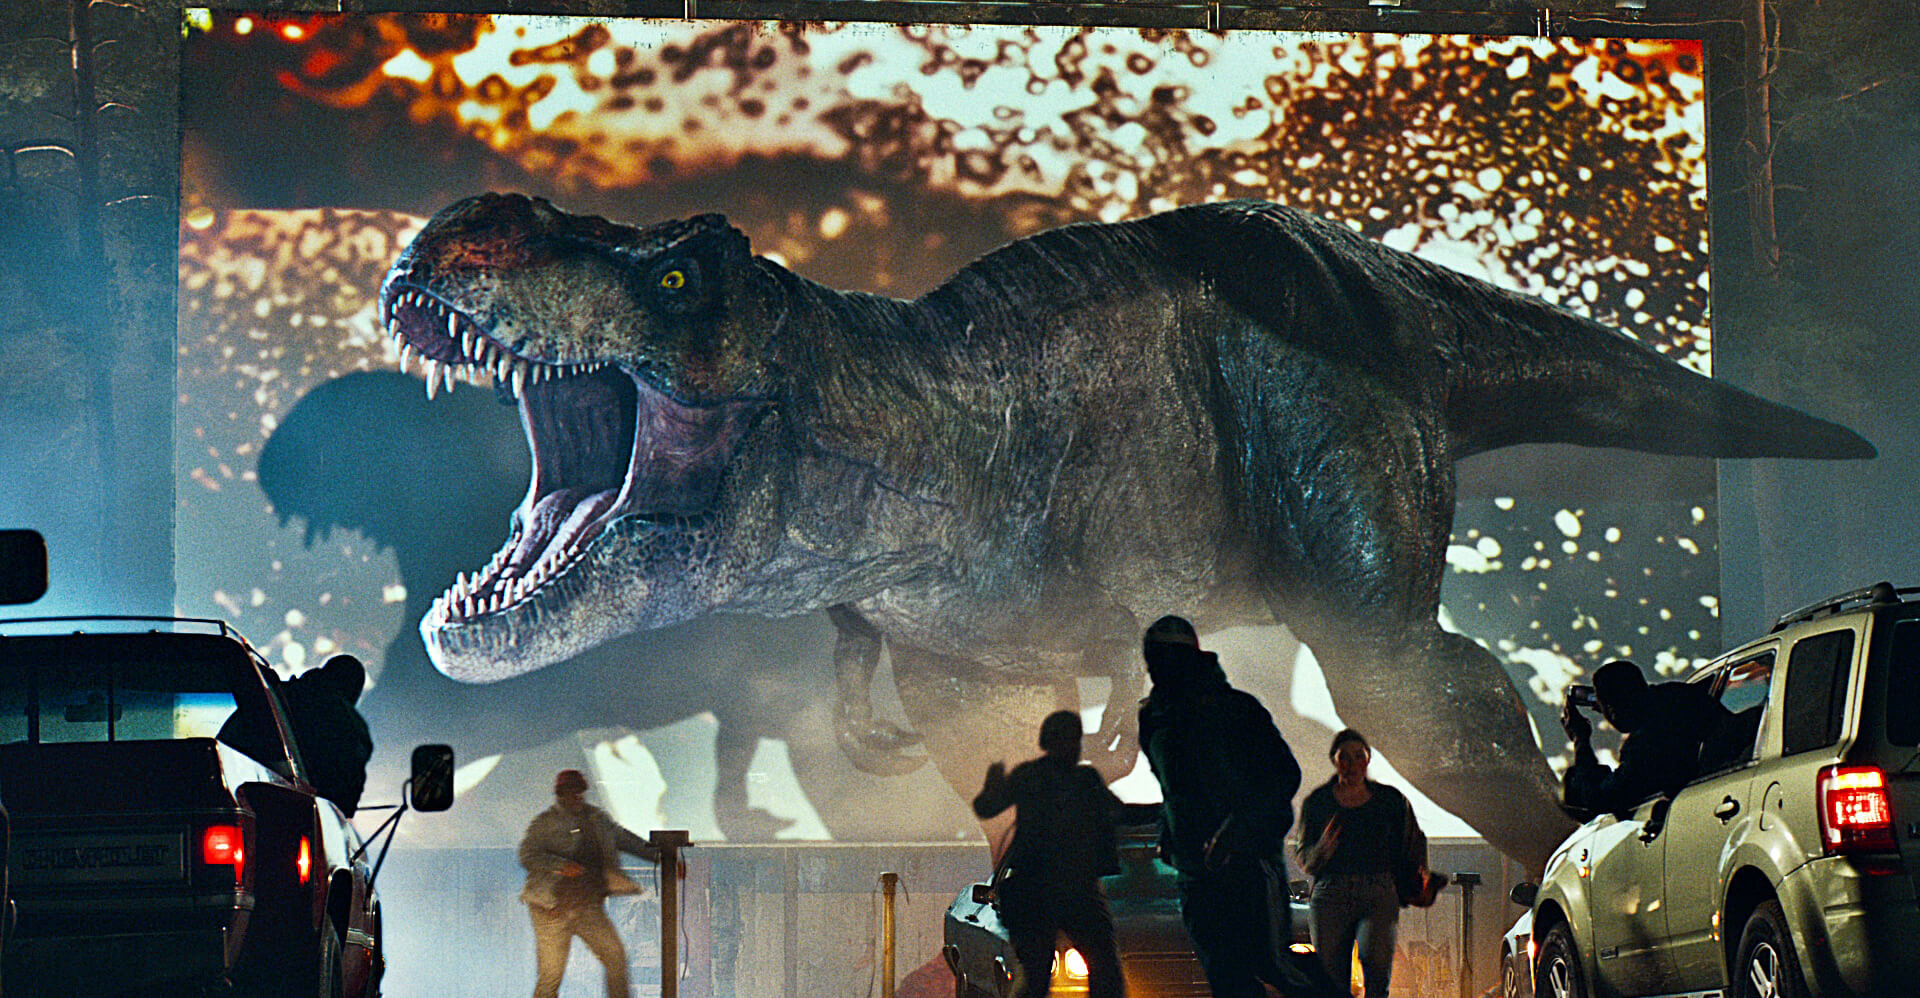 Jurassic World Dominion tracking towards a $165-$205 million domestic opening